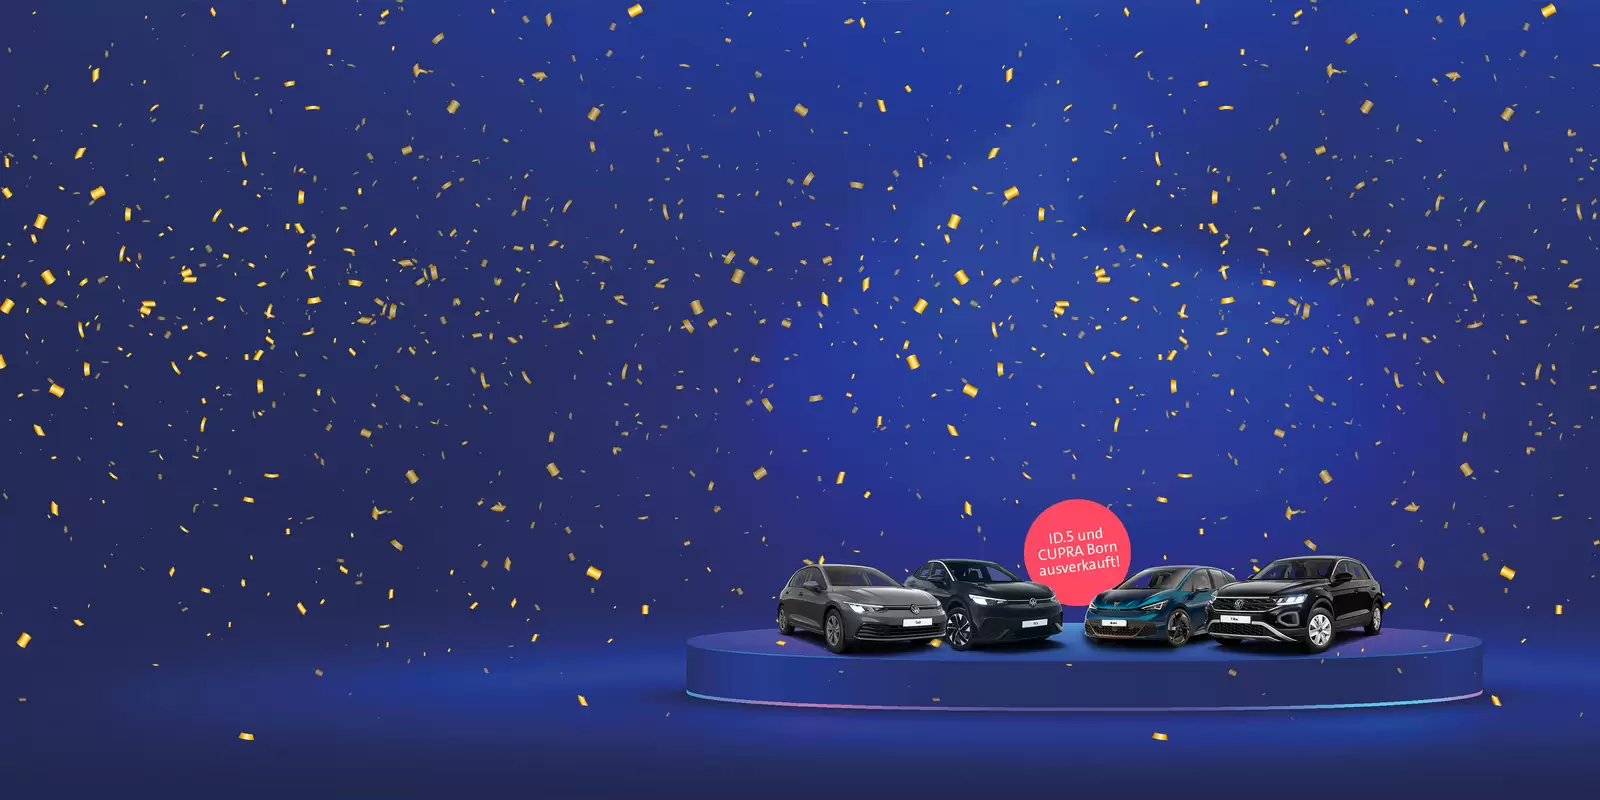 VW Audi Seat Autoersatzteile gratis Versand -20% Rabatt - VW Golf